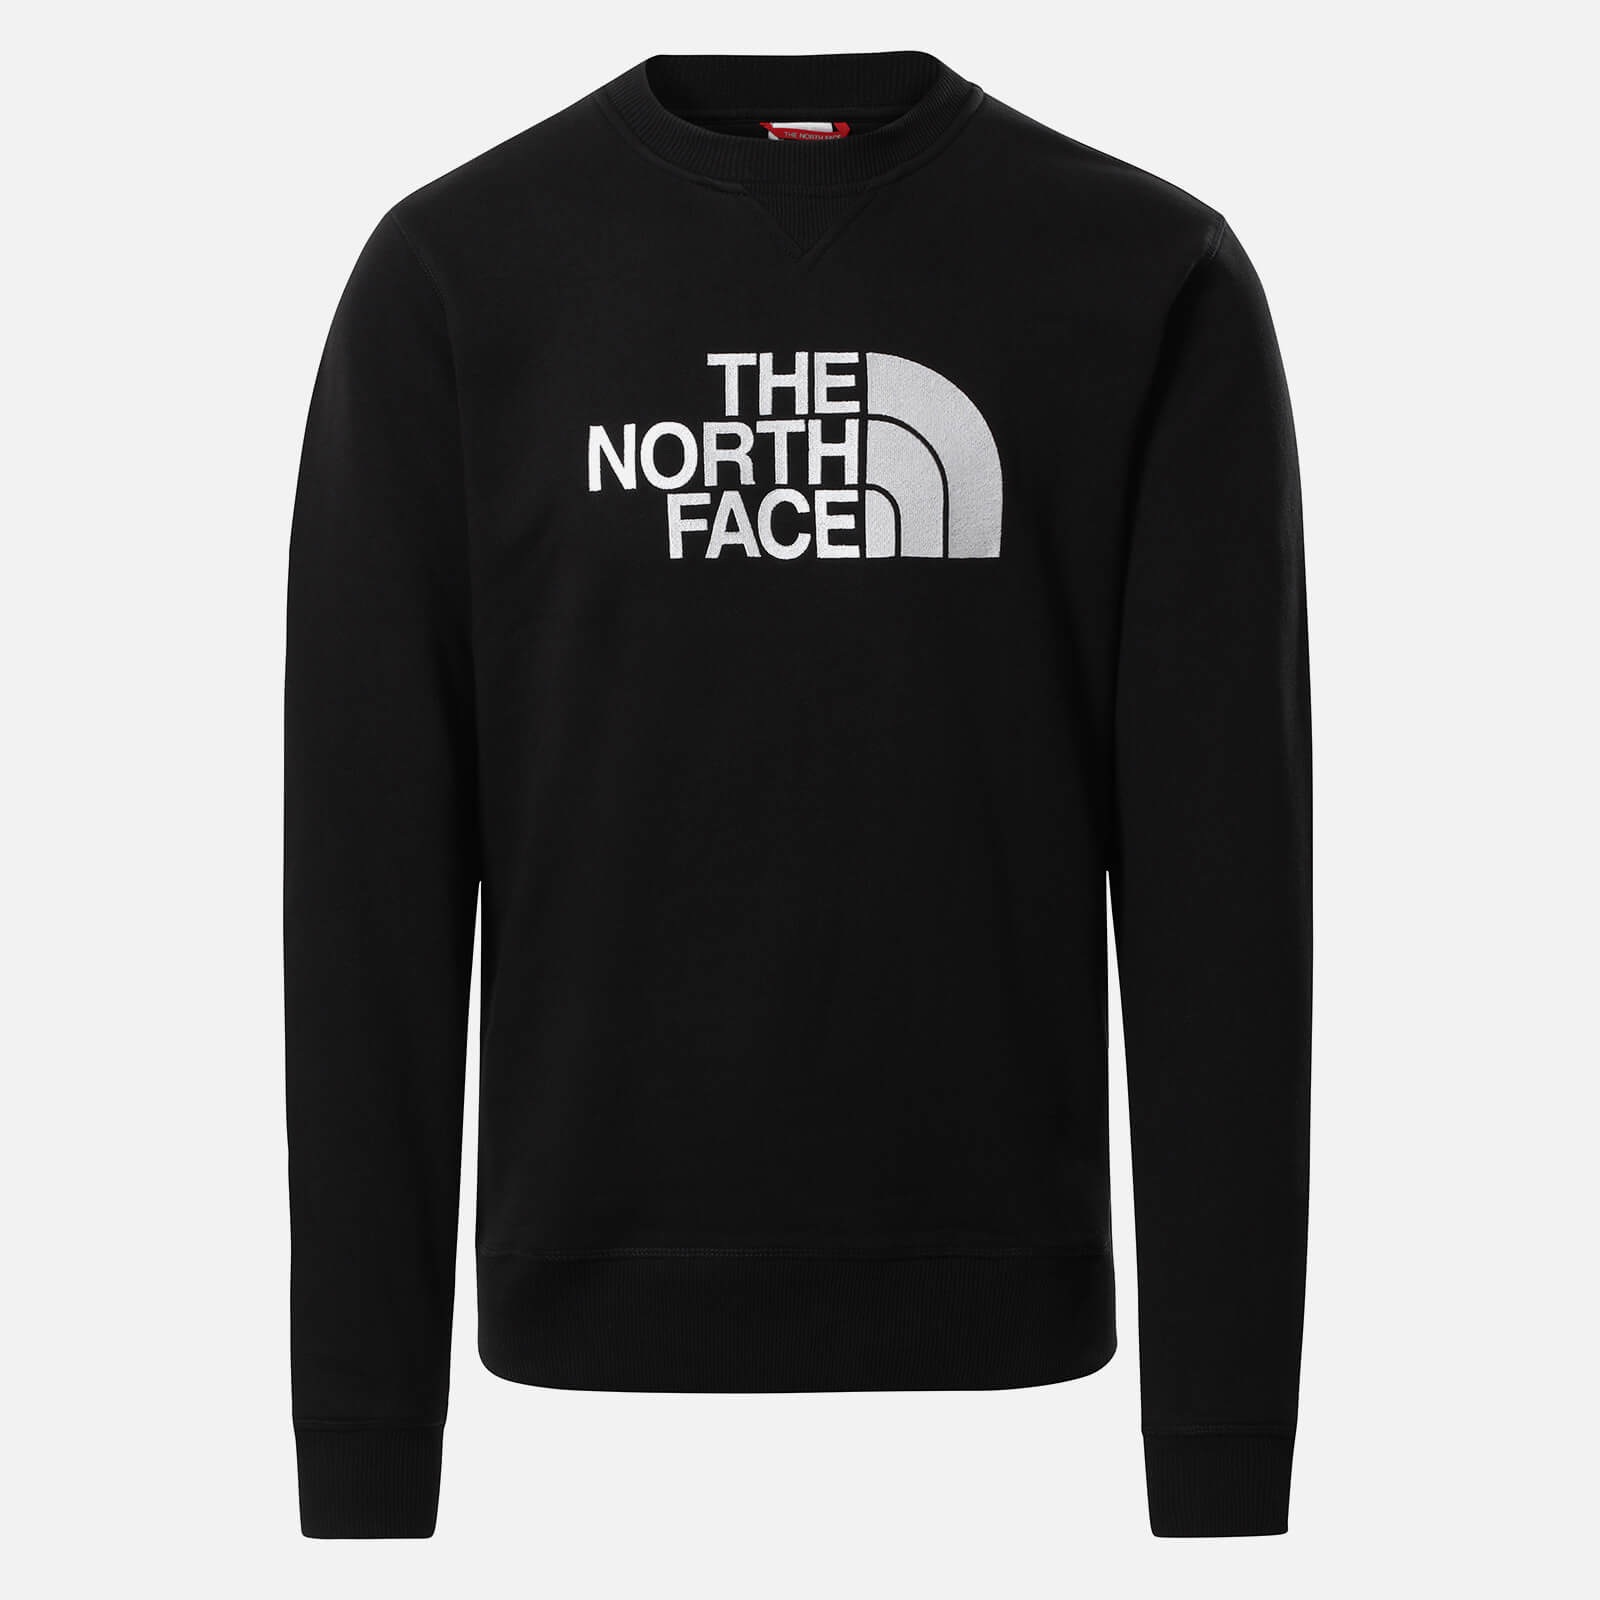 The North Face Men's Drew Peak Sweatshirt - Tnf Black/Tnf White - S